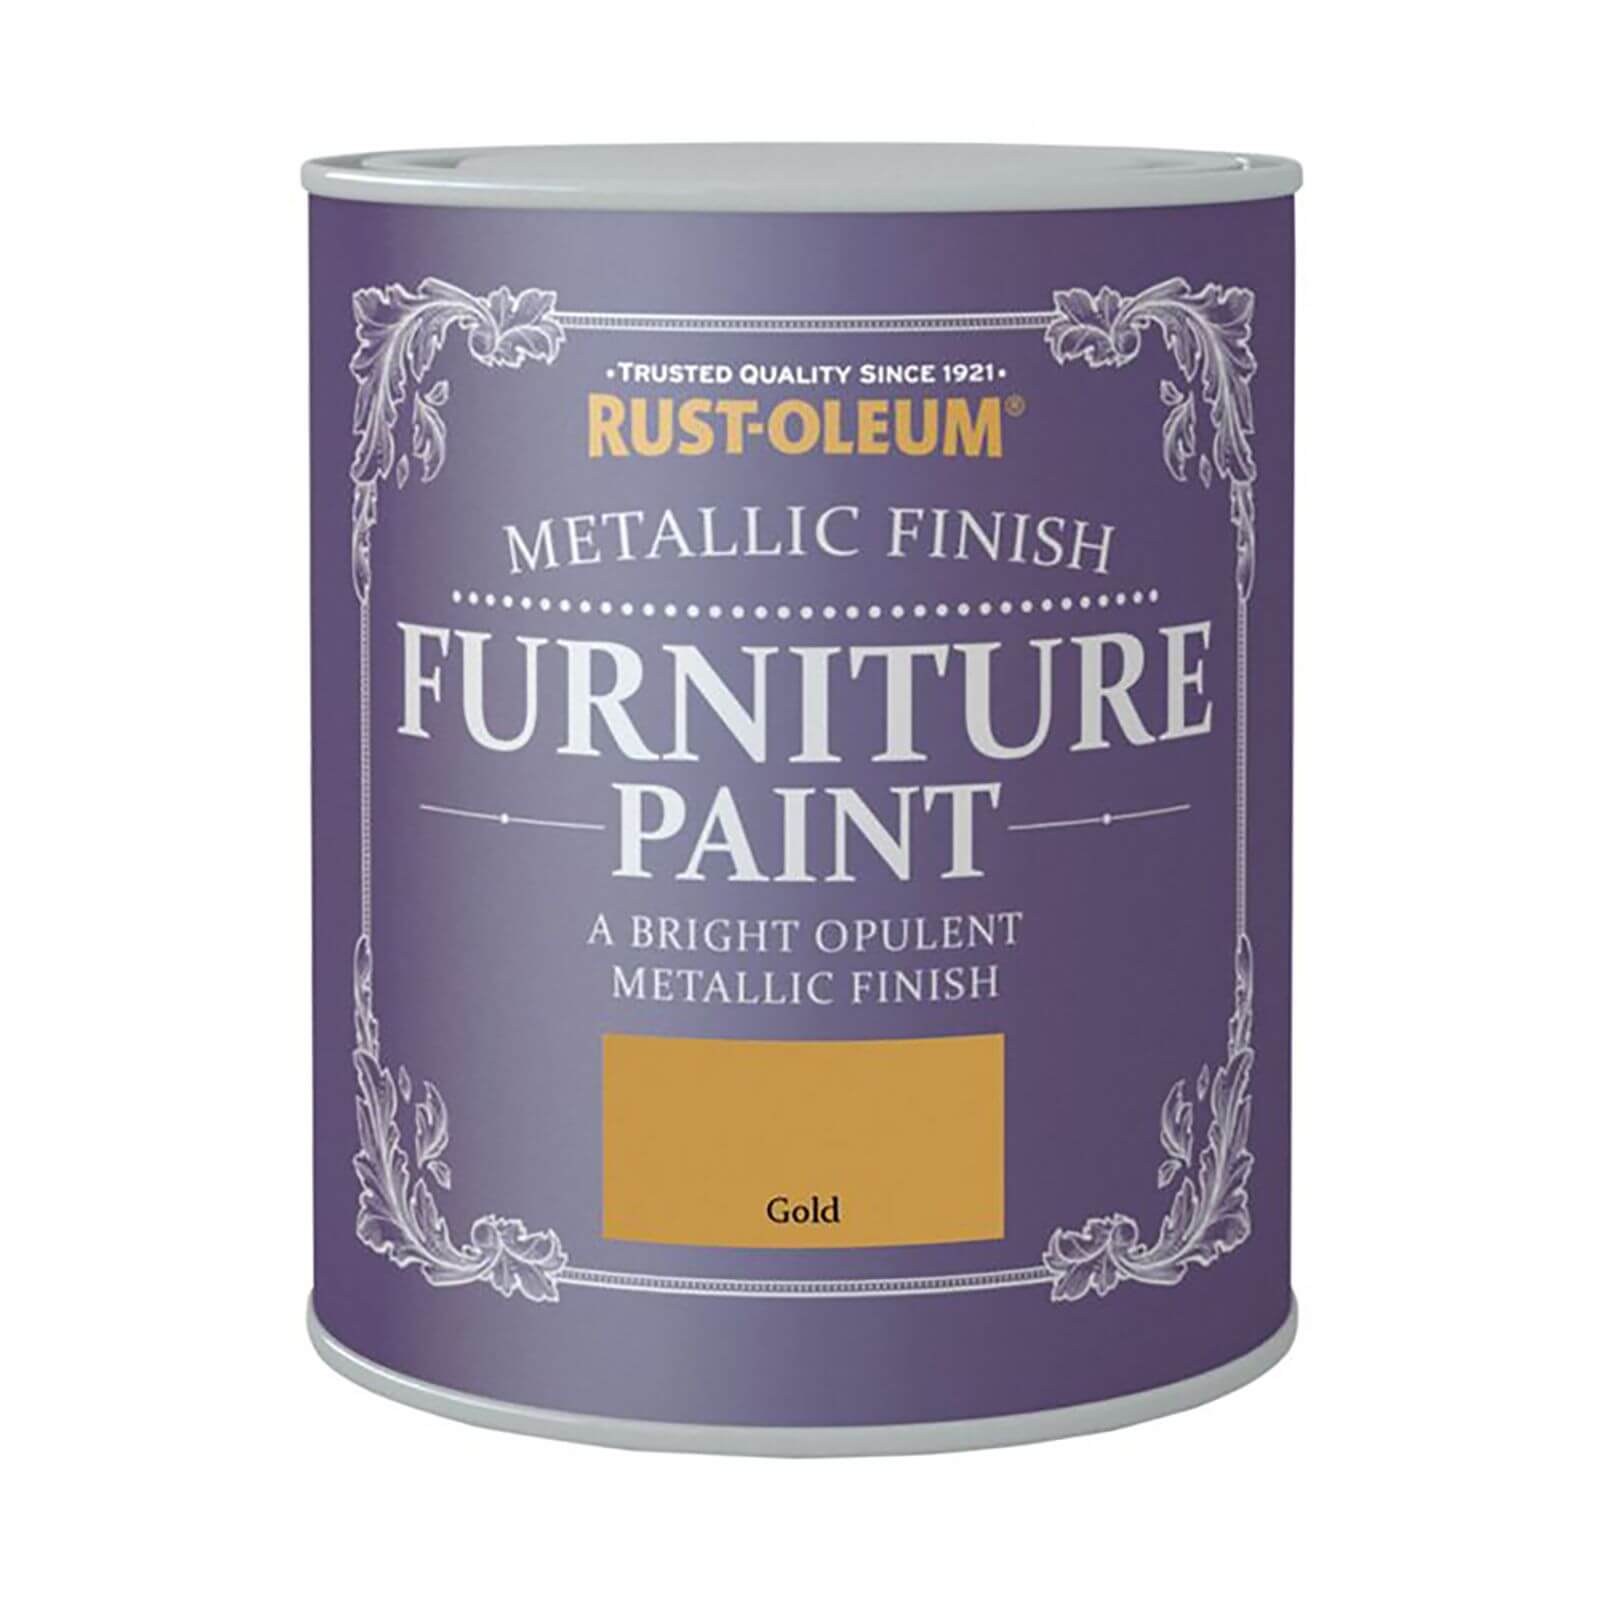 Photo of Rust-oleum Metallic Furniture Paint - Gold - 125ml